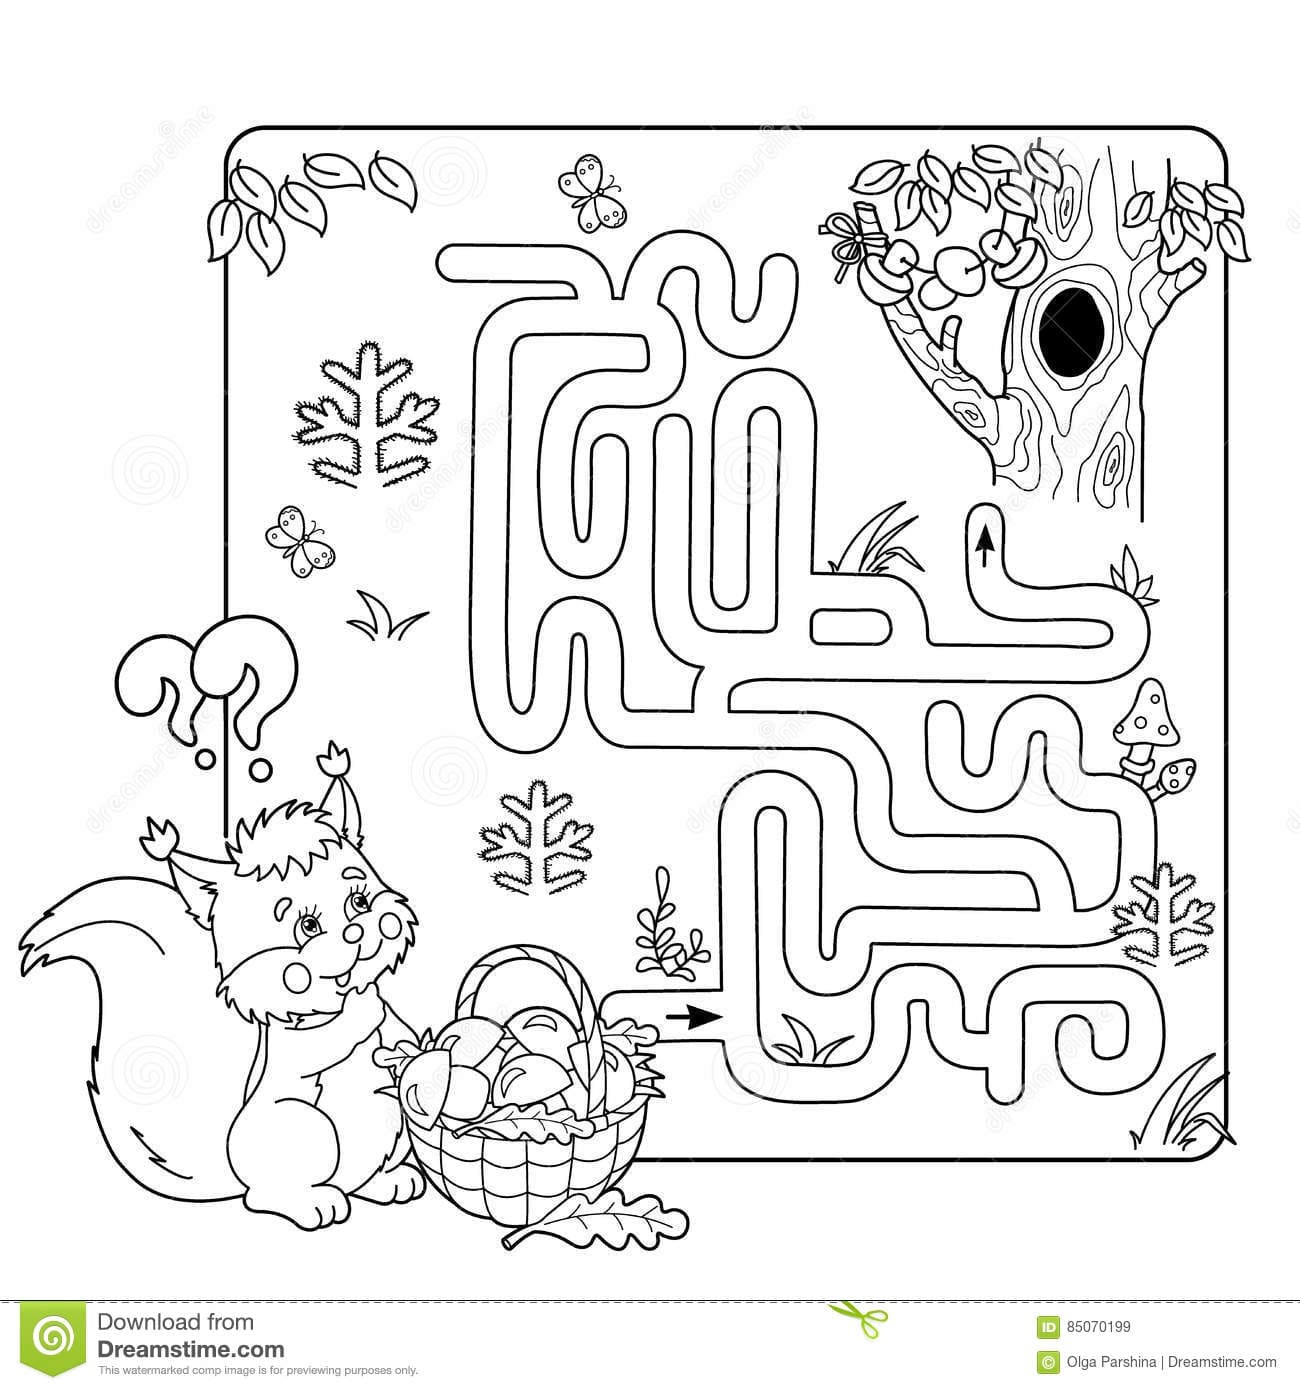 Maze or Labyrinth Game for Preschool Children